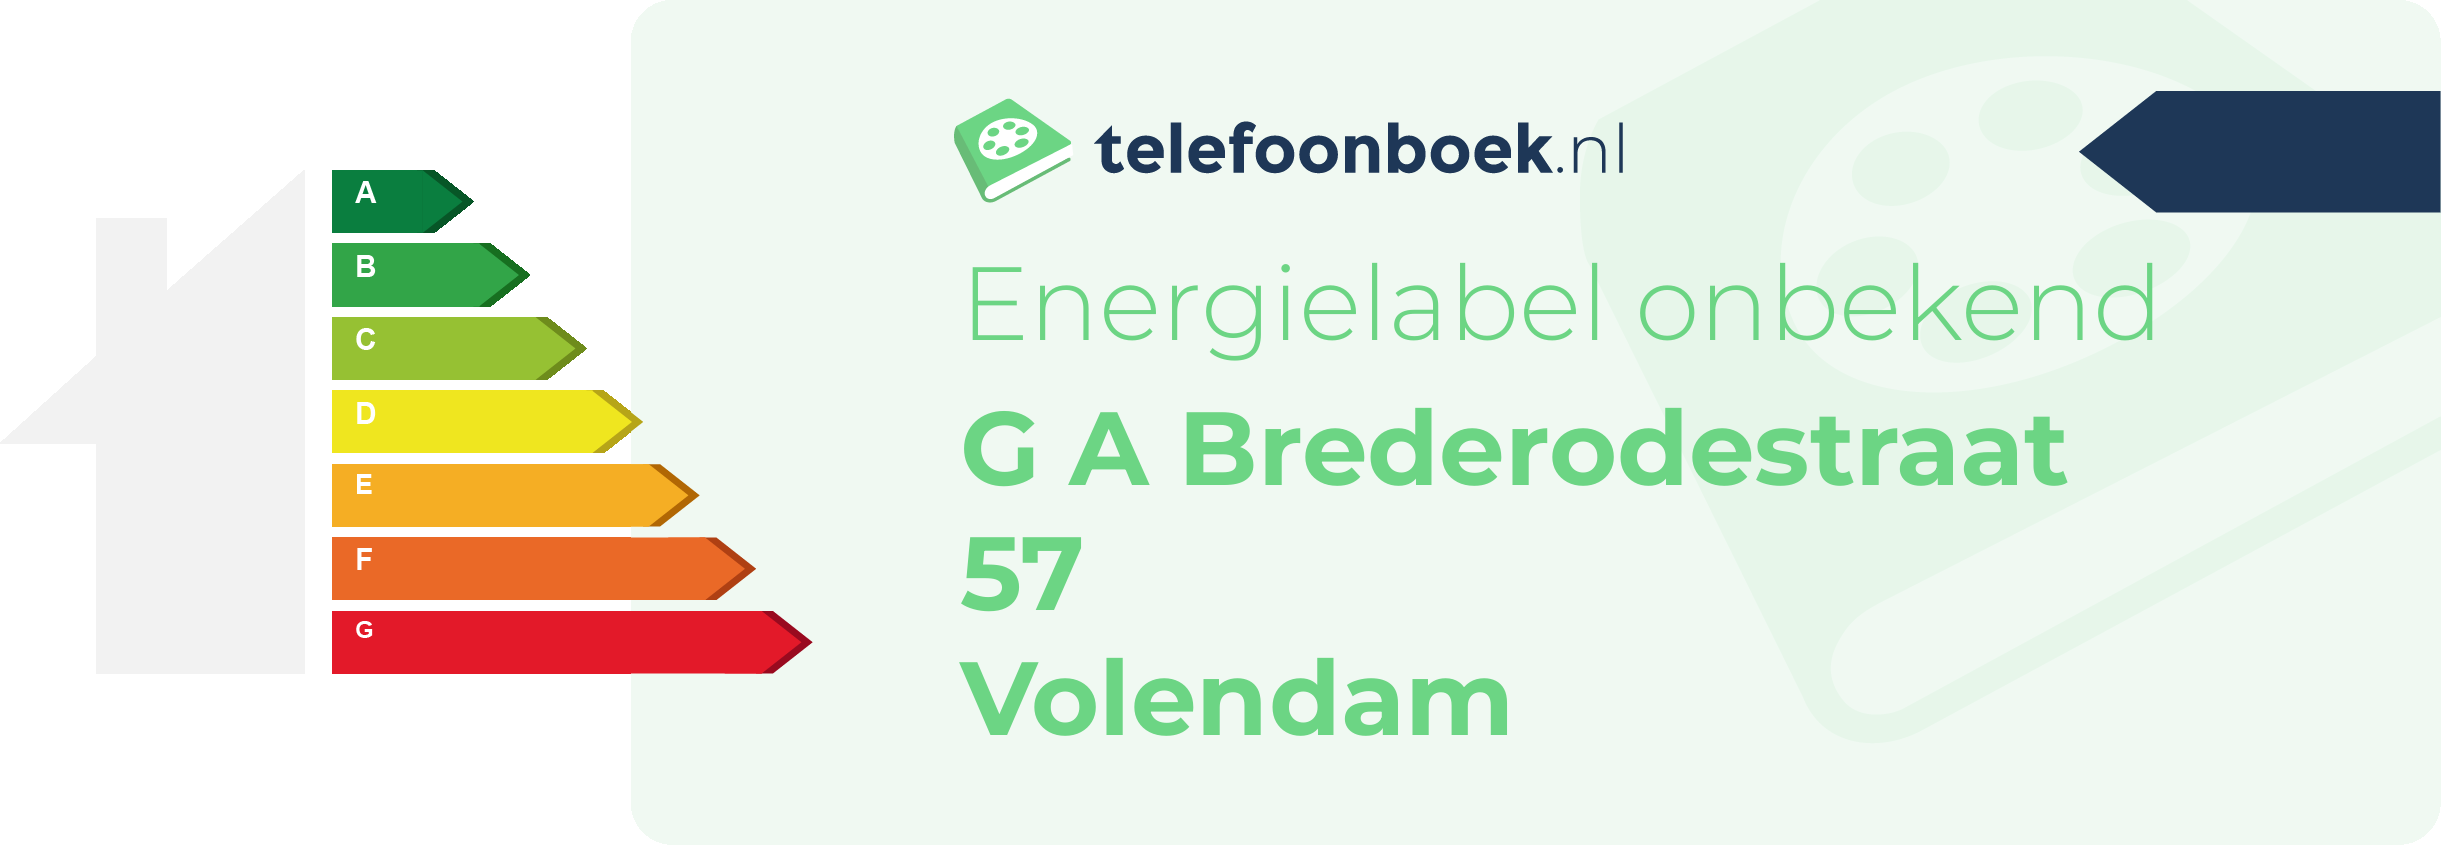 Energielabel G A Brederodestraat 57 Volendam